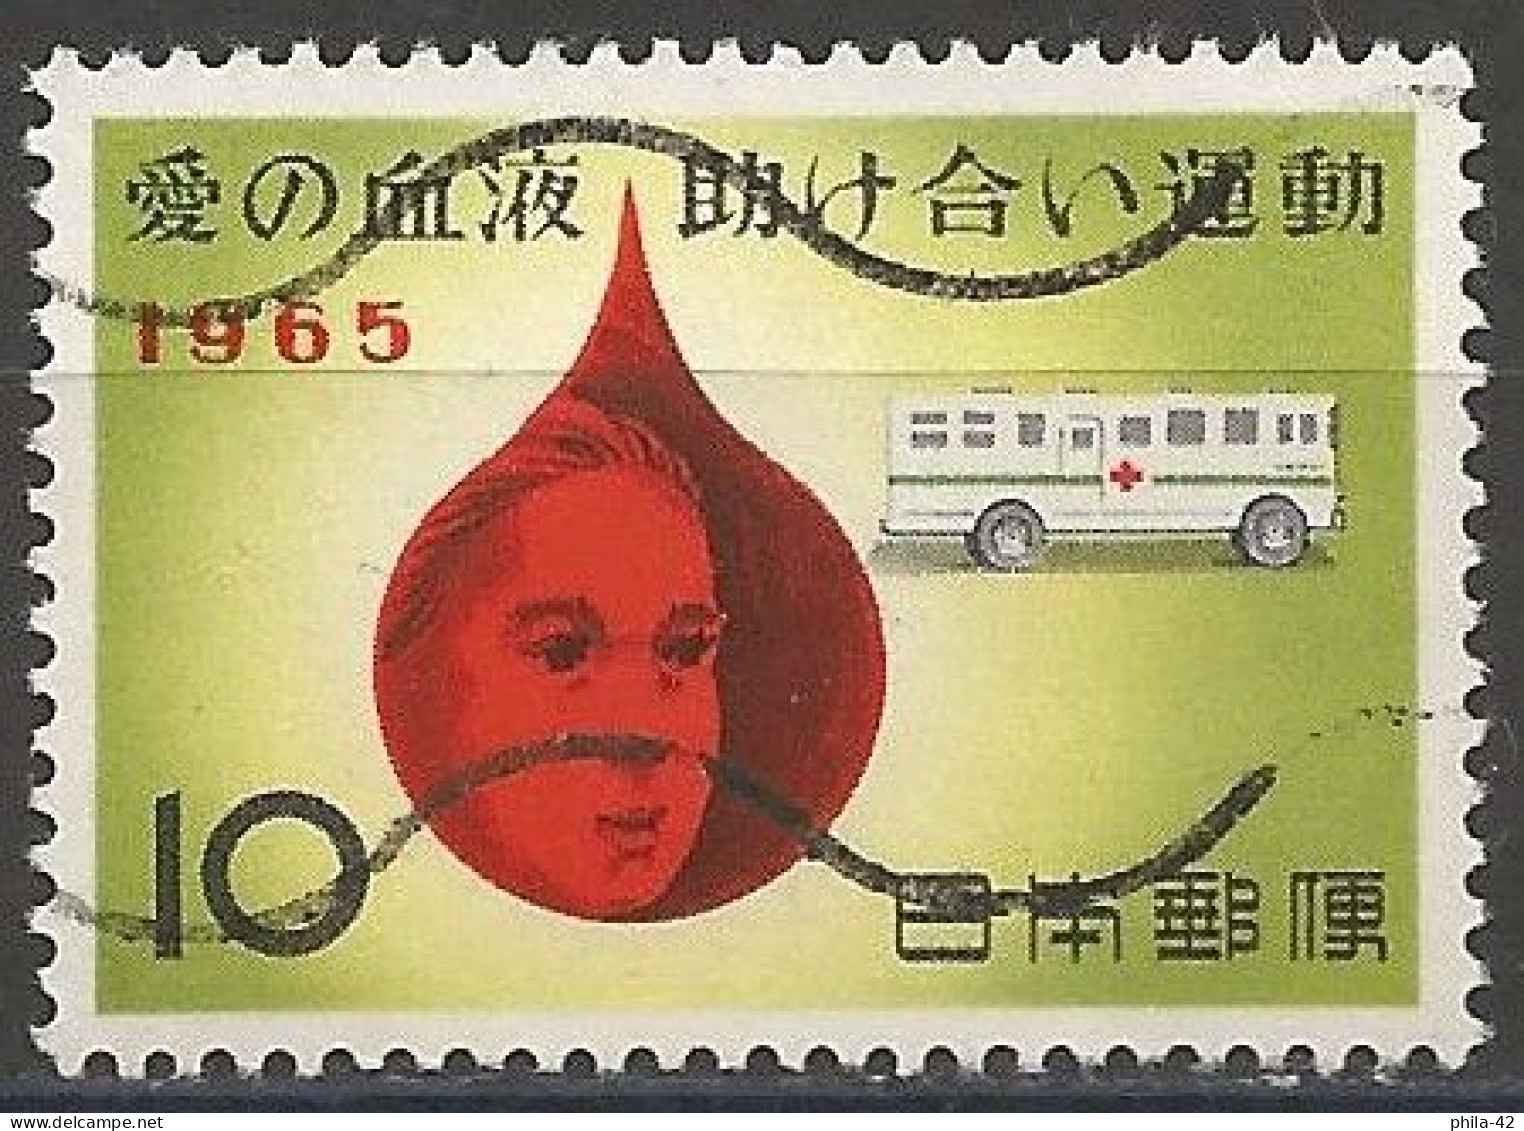 Japan 1965 - Mi 895 - YT 809 ( Blood Donation Campaign ) - Usati